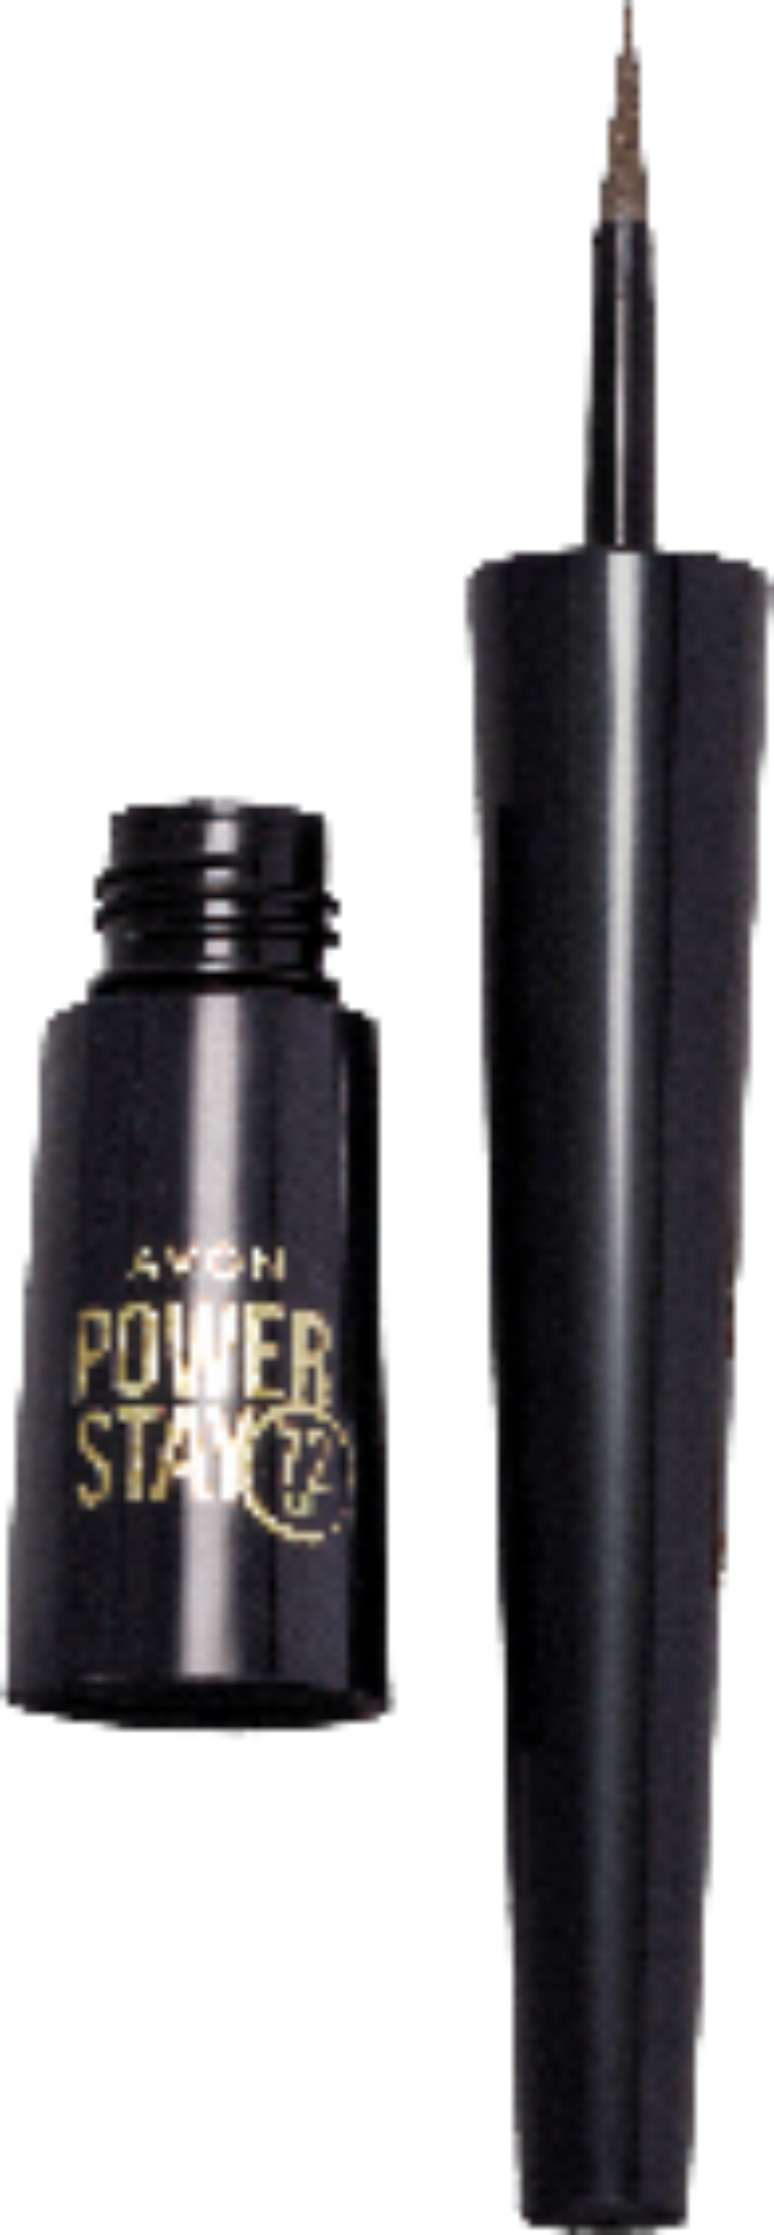  Tint para Sobrancelhas Avon Power Stay 72h 